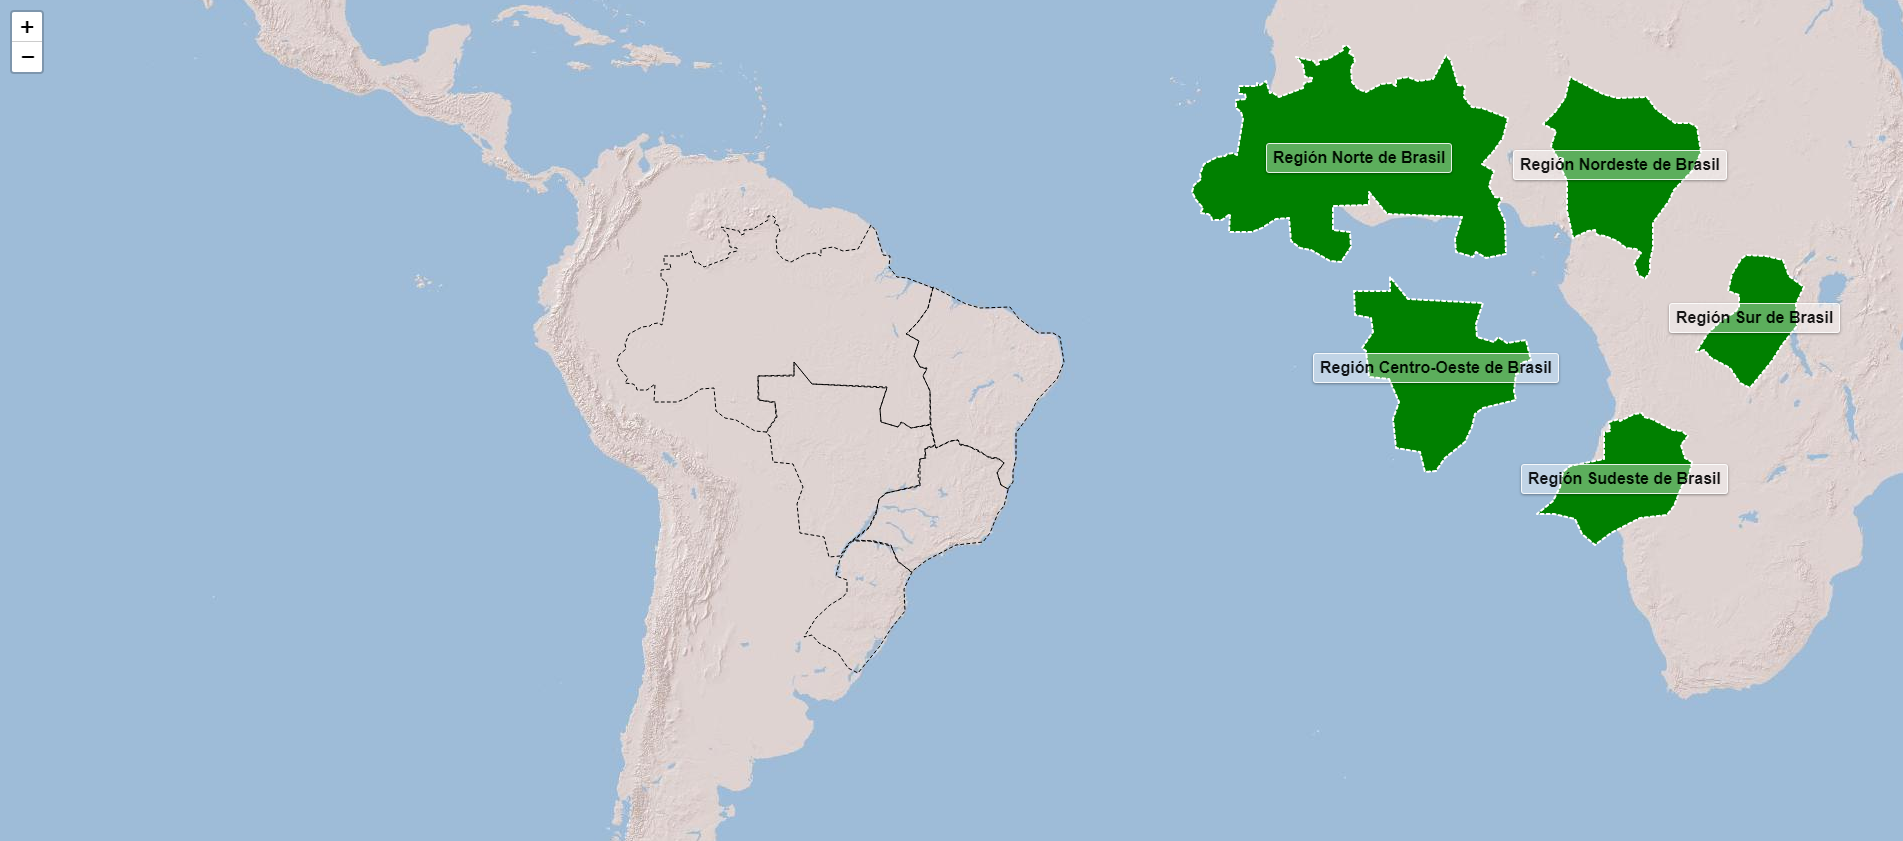 Regions del Brasil